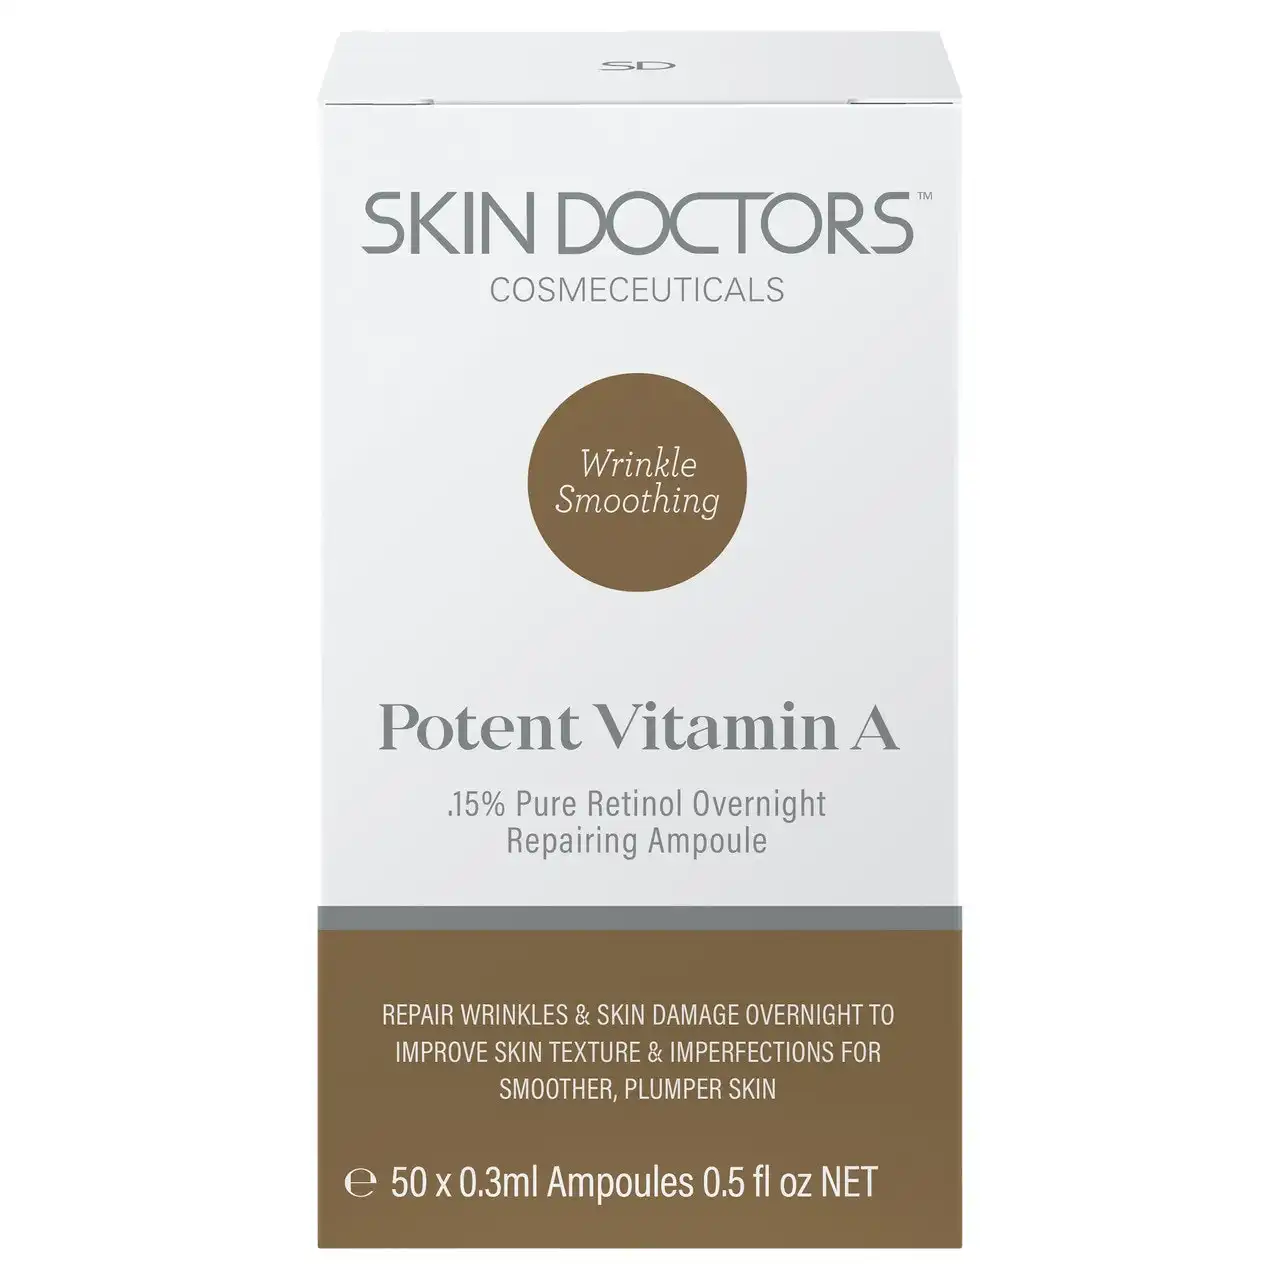 Skin Doctors Potent Vitamin A Ampoules 50 x 0.3ml